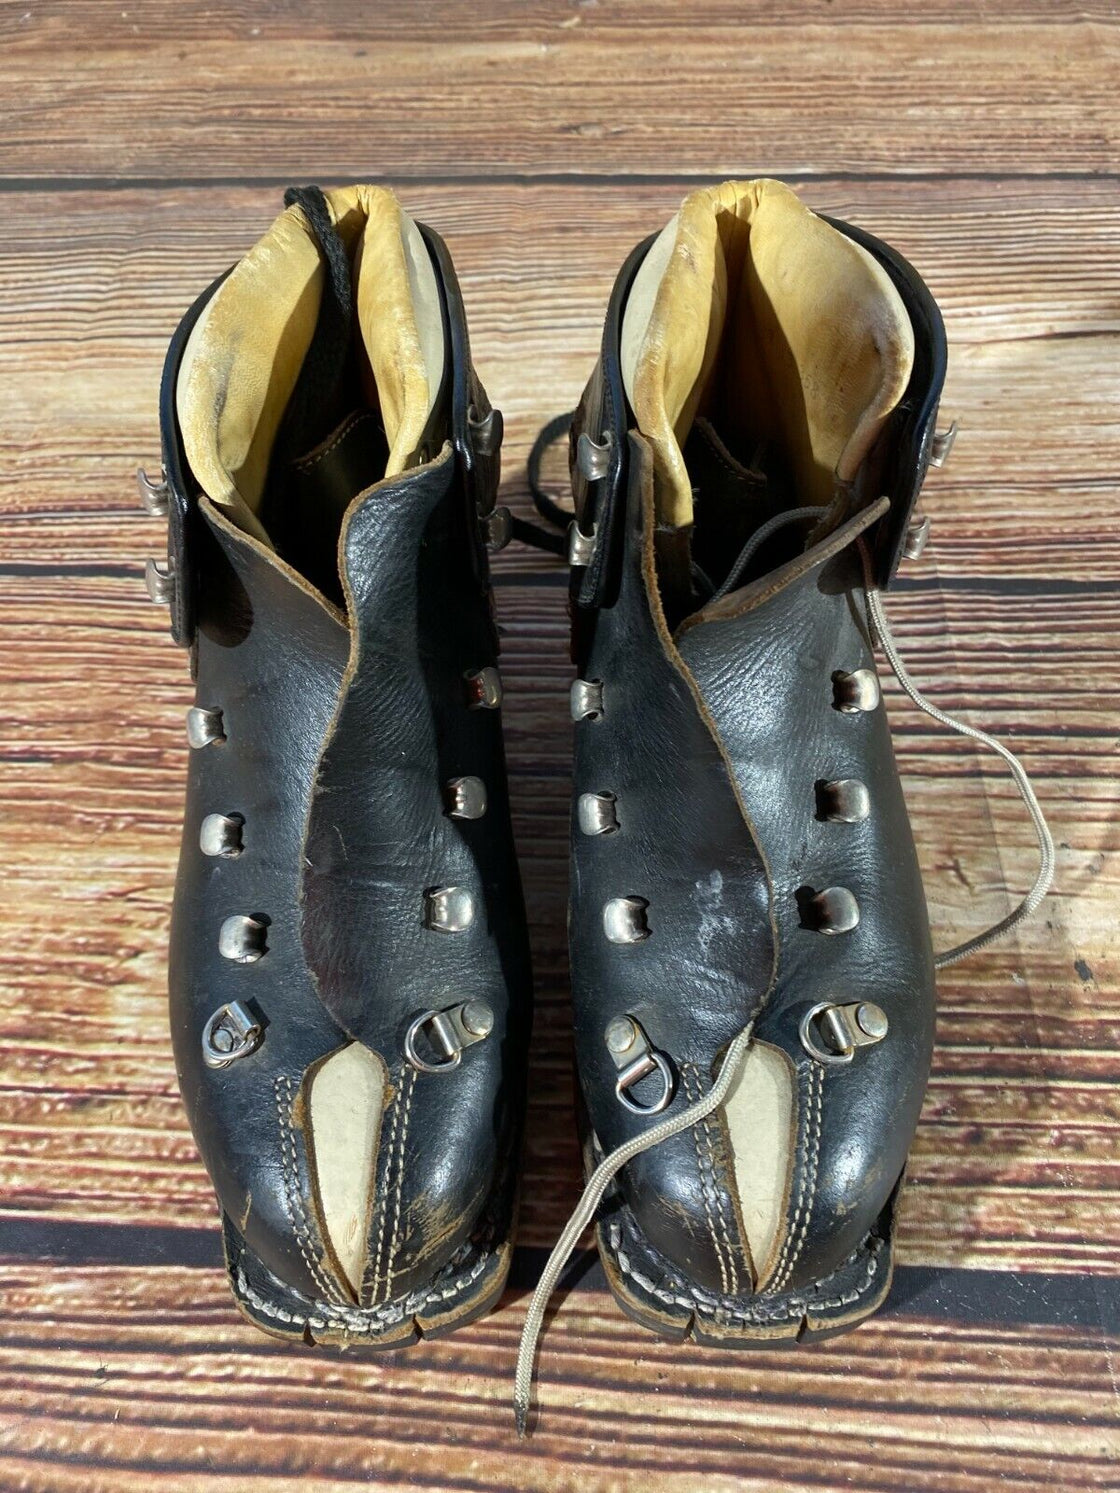 KASTINGER Vintage Alpine Ski Boots Skiing US5, UK4.5 Mondo 240 for Cable Binding